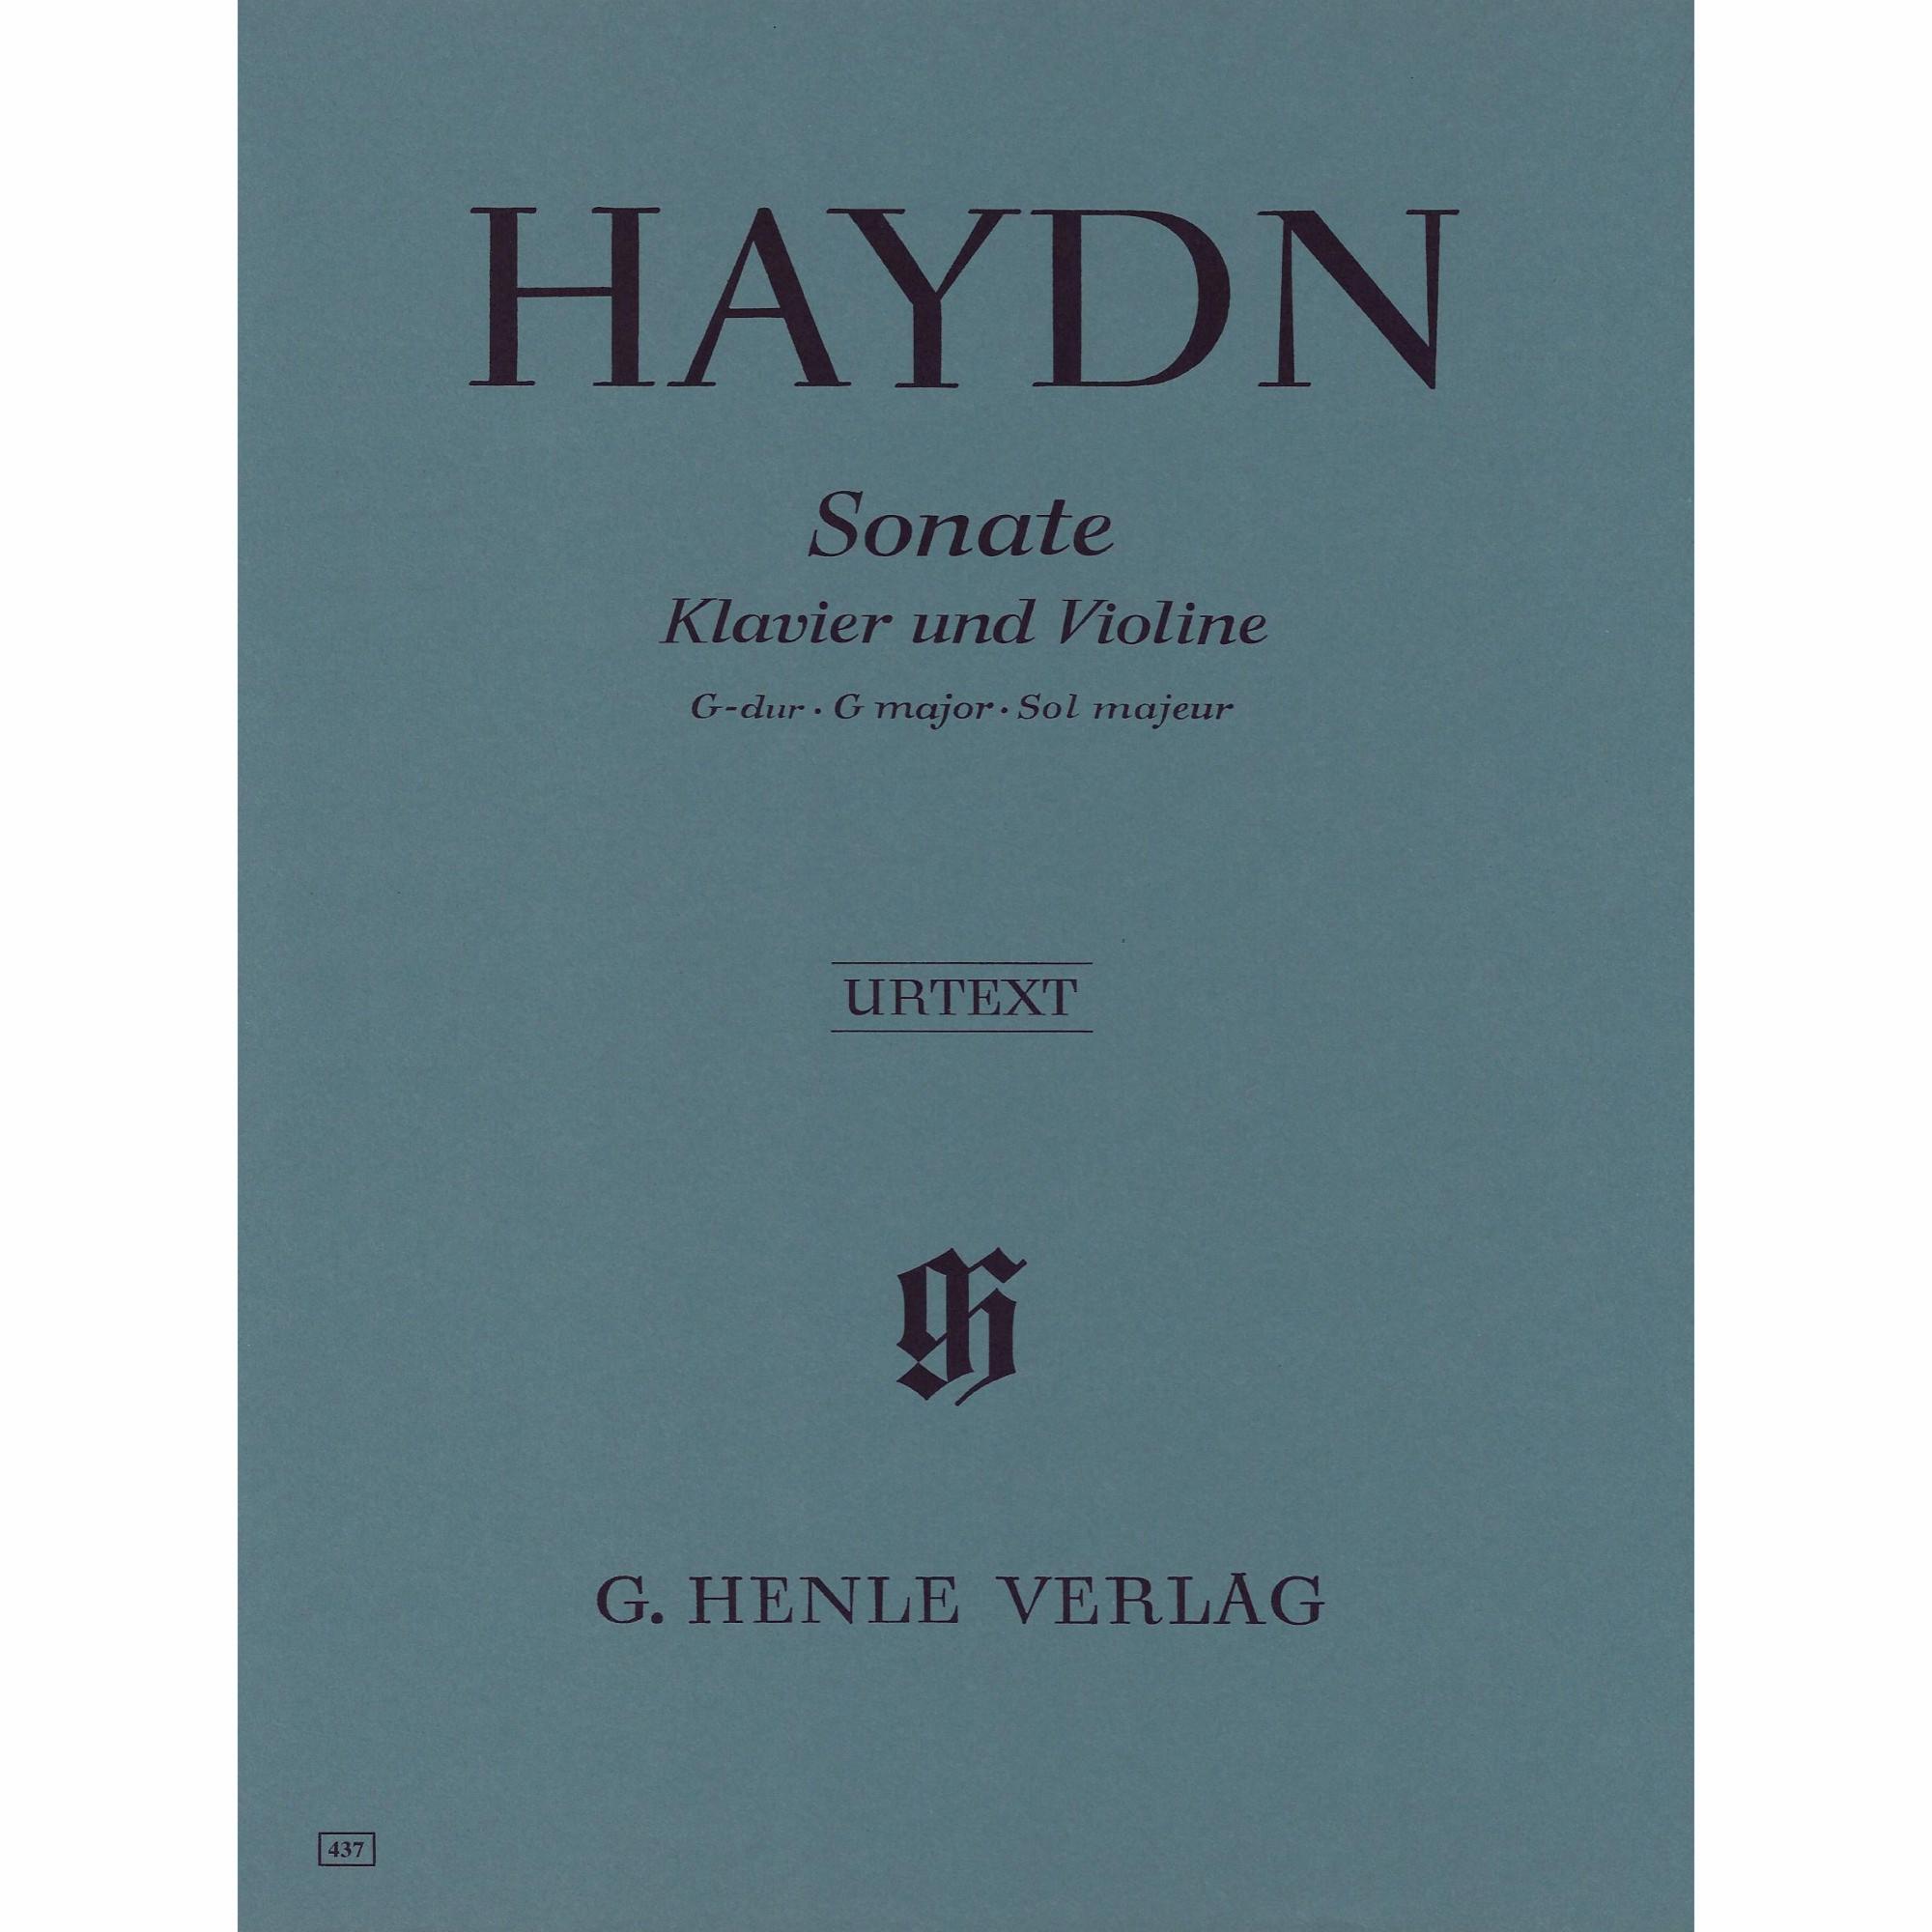 Haydn -- Sonata in G Major for Violin and Piano